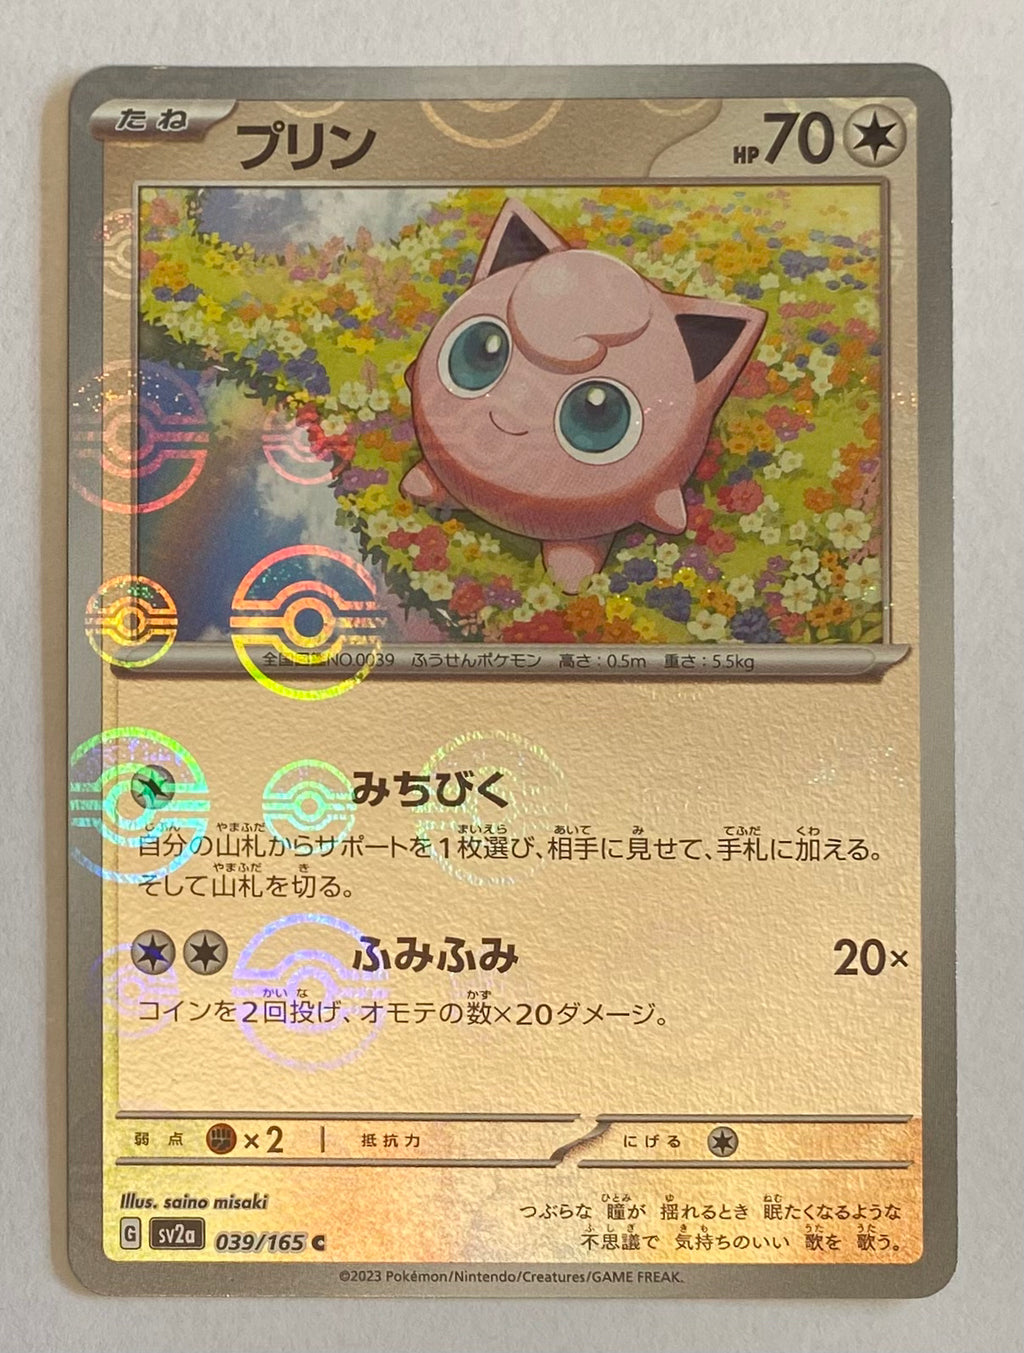 sv2a Japanese Pokemon Card 151 - 039/165 Jigglypuff Reverse Holo